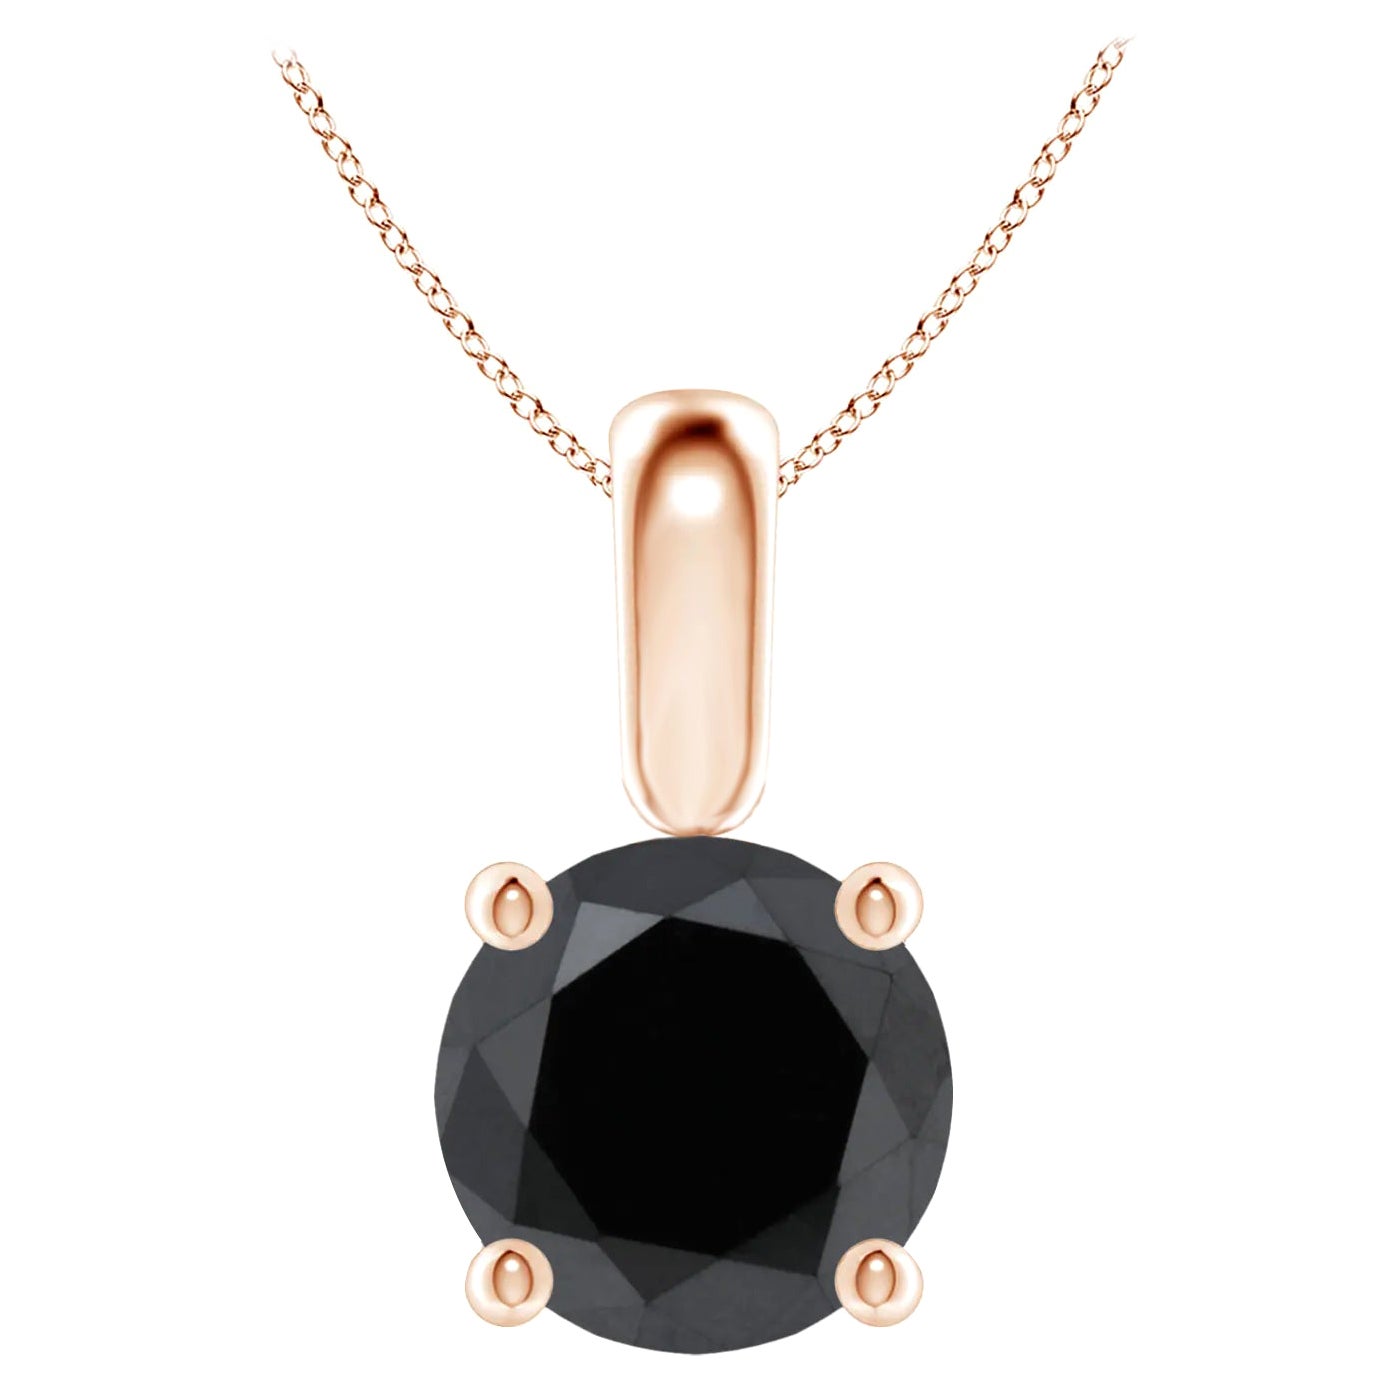 2.26 Carat Round Black Diamond Solitaire Pendant Necklace in 14K Rose Gold